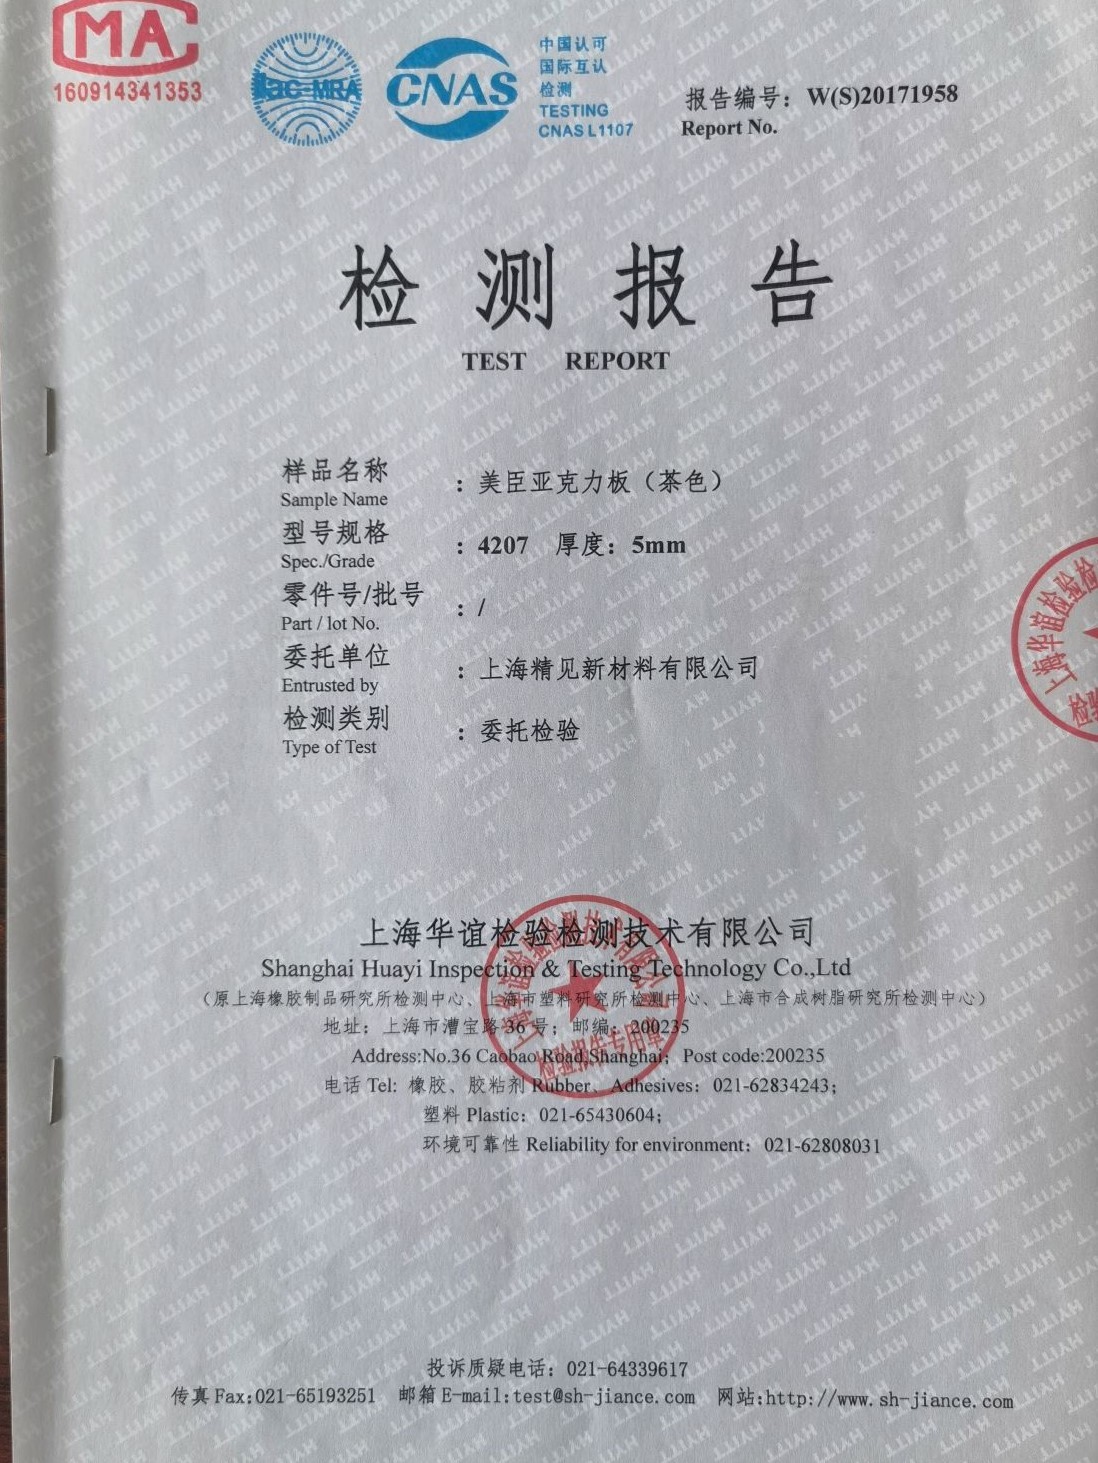 Shanghai Kingscope New Material Co., Ltd. Certifications